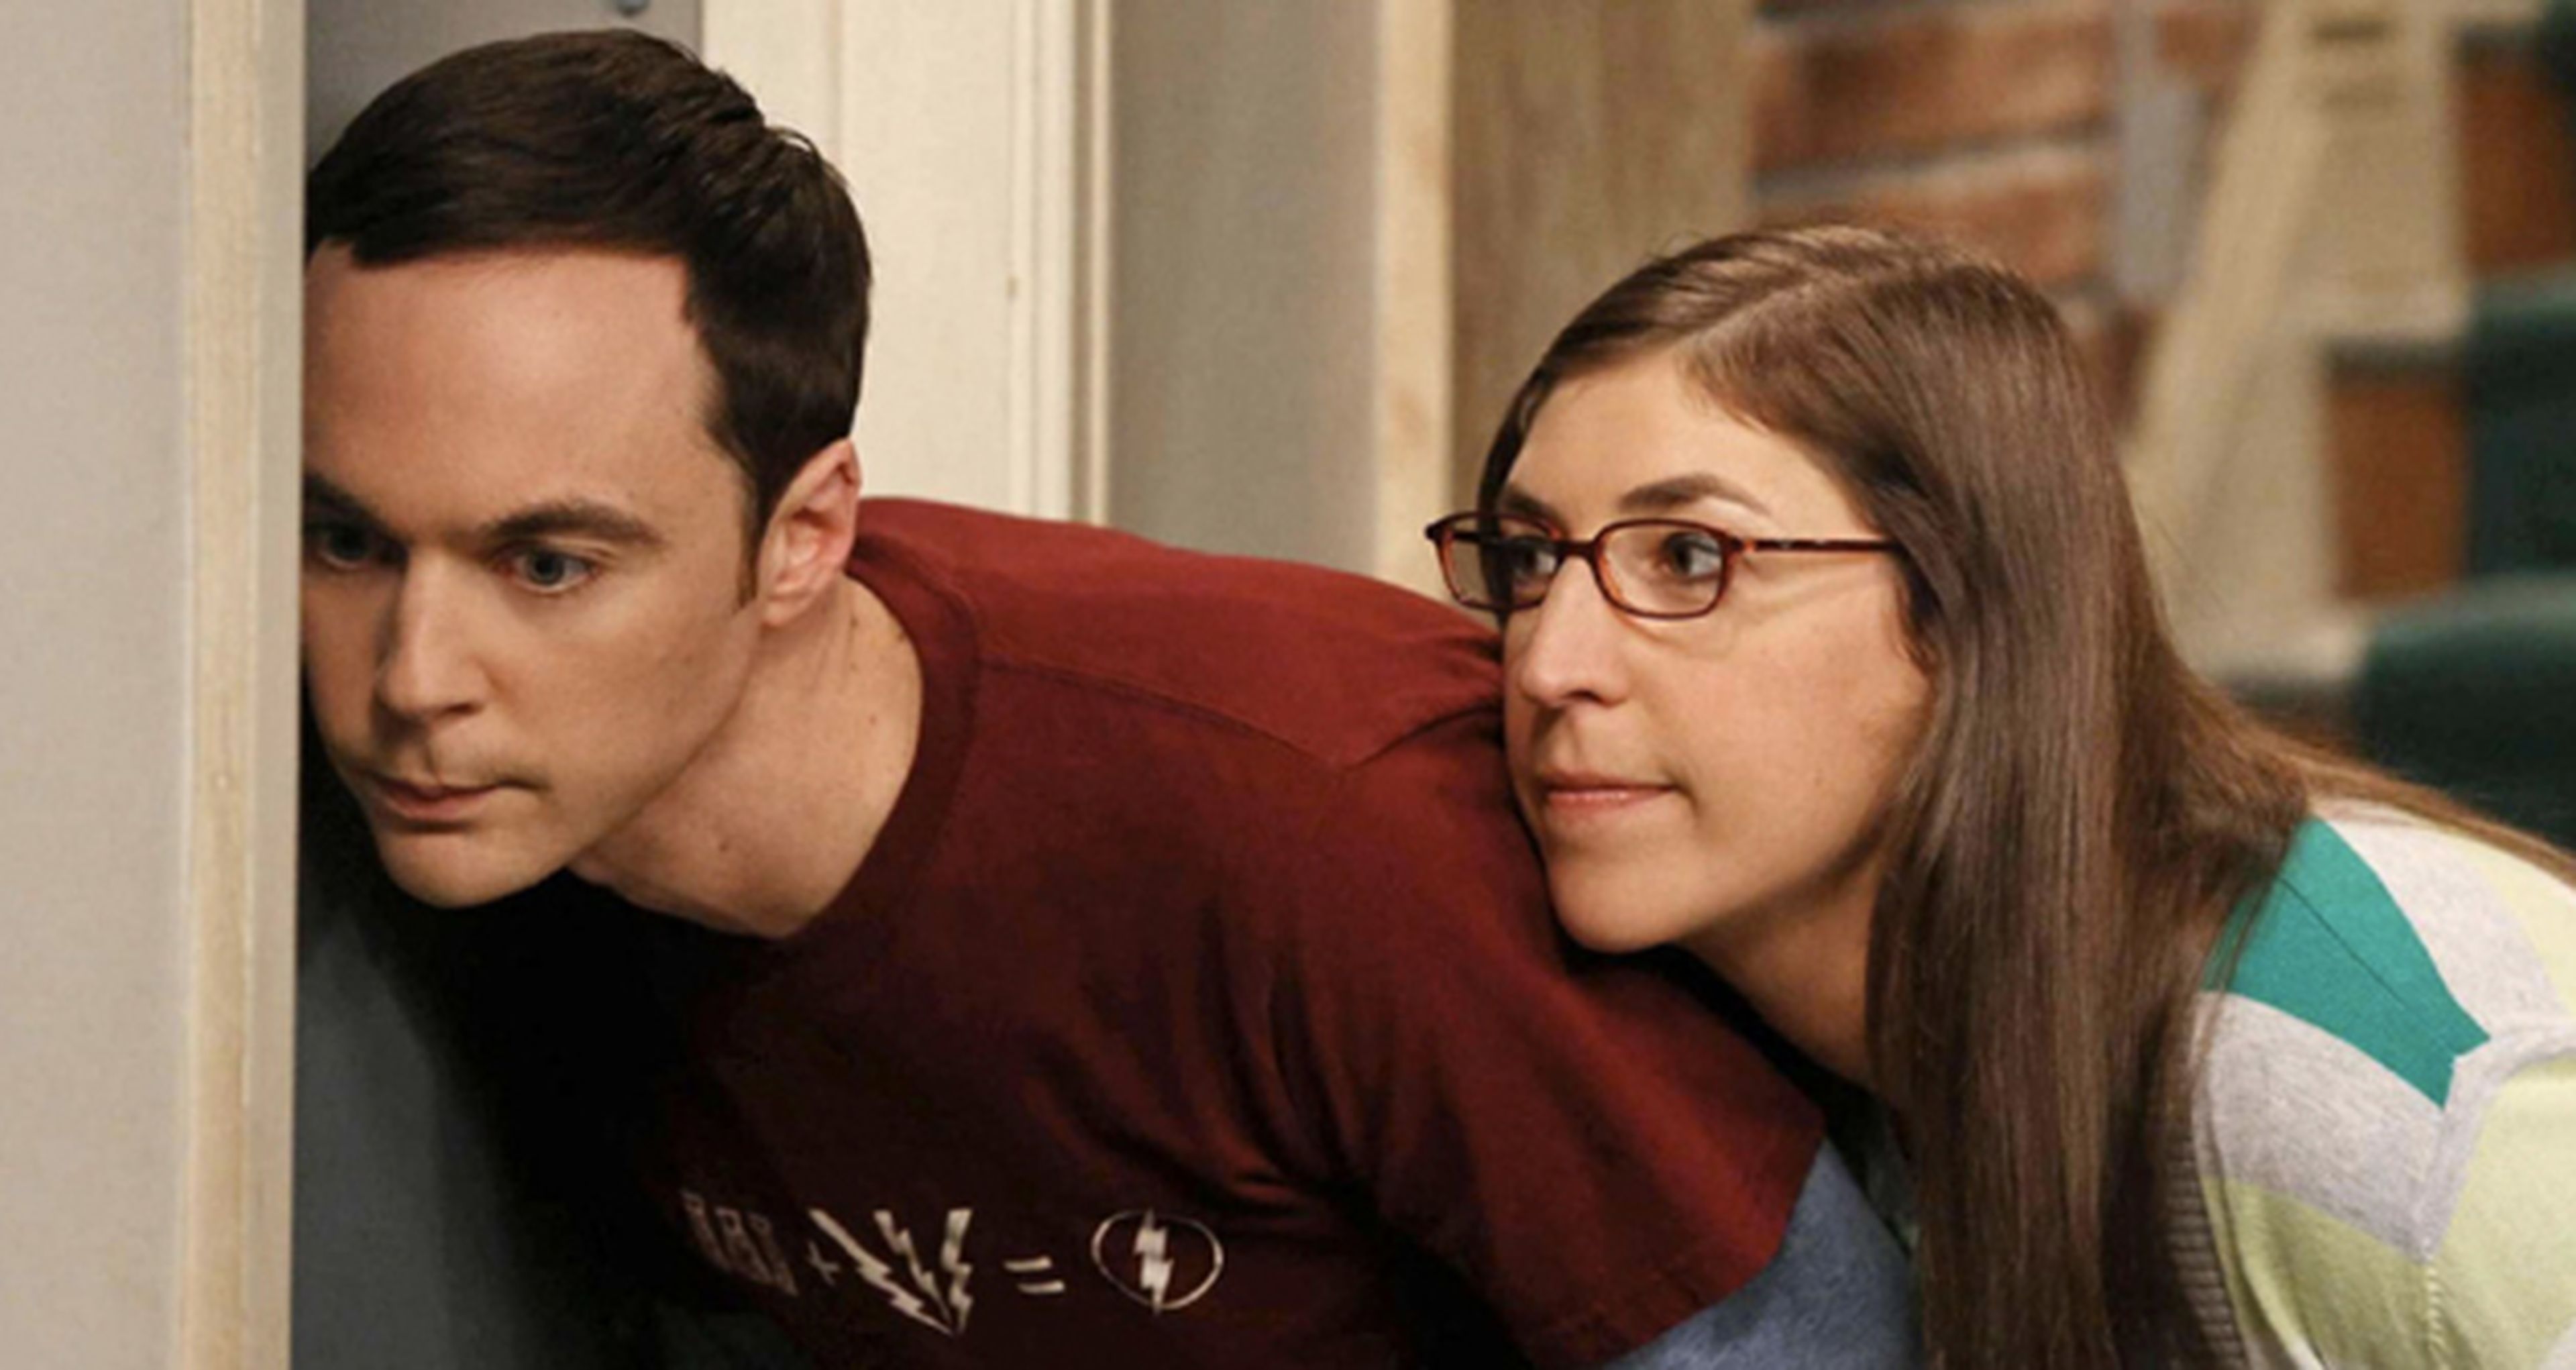 Tres nuevas temporadas para The Big Bang Theory